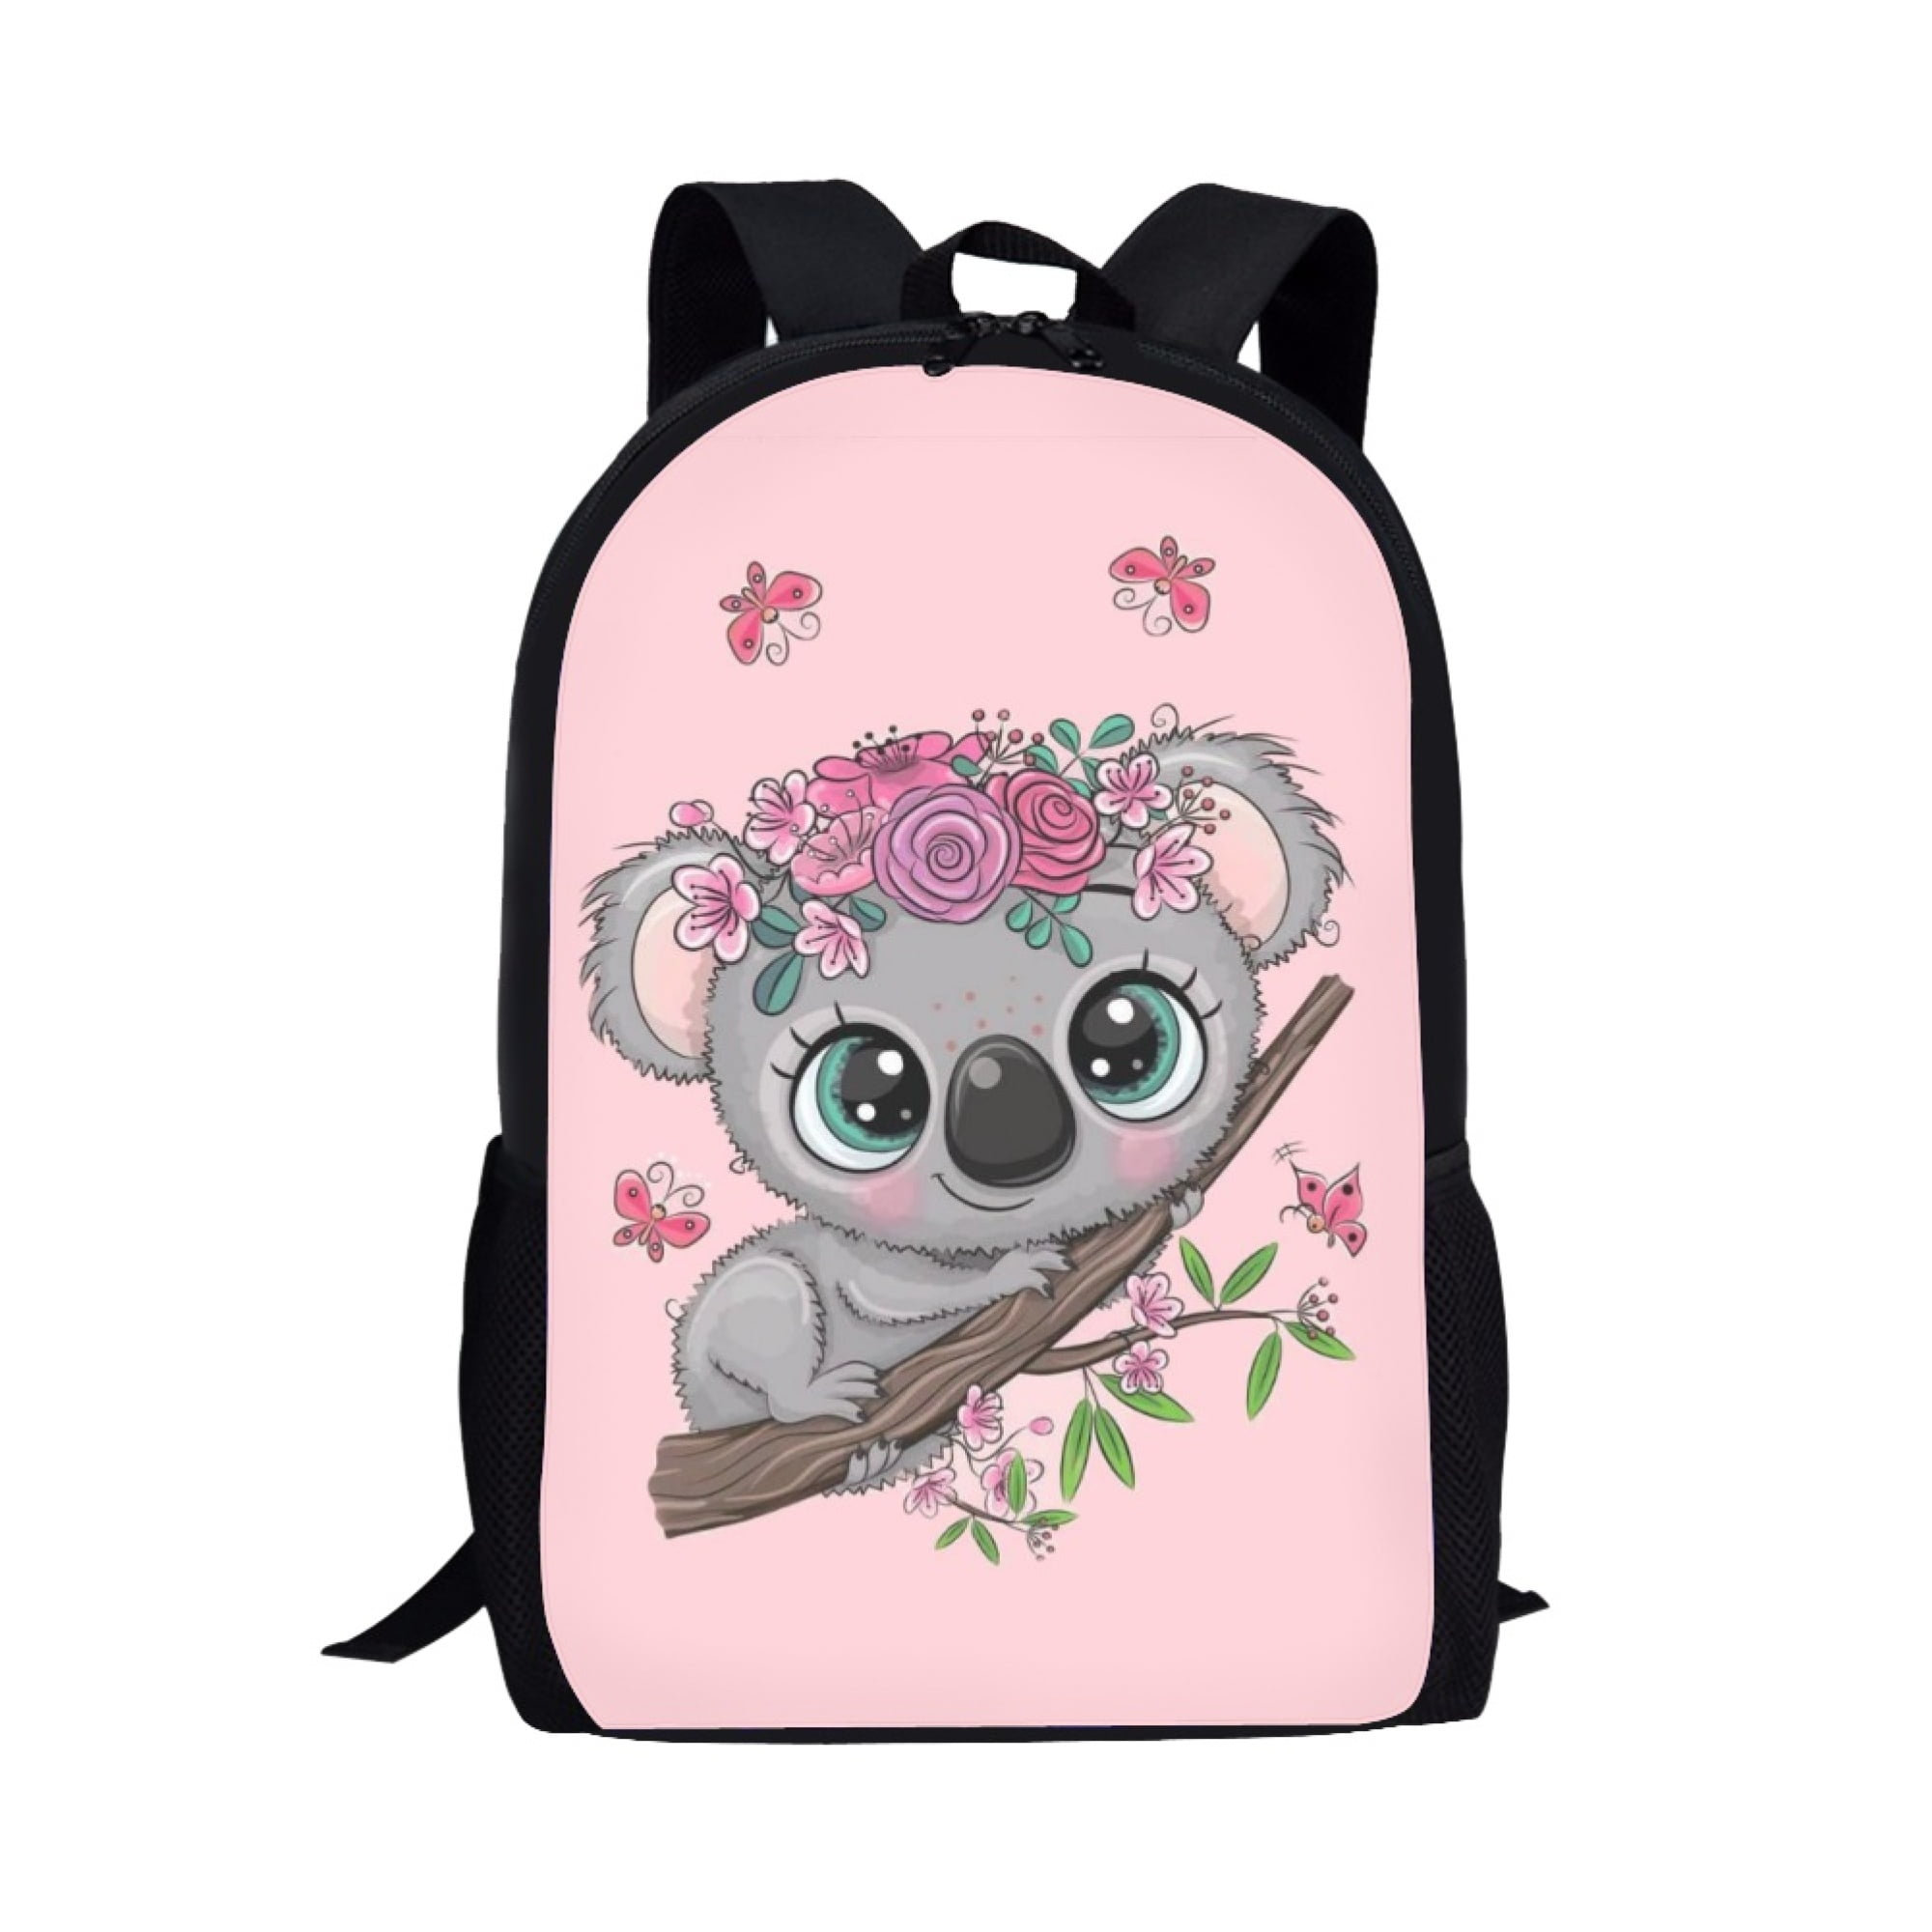 Under One Sky Sloth Monkey Mini Backpack Travel Gym Bag Purse